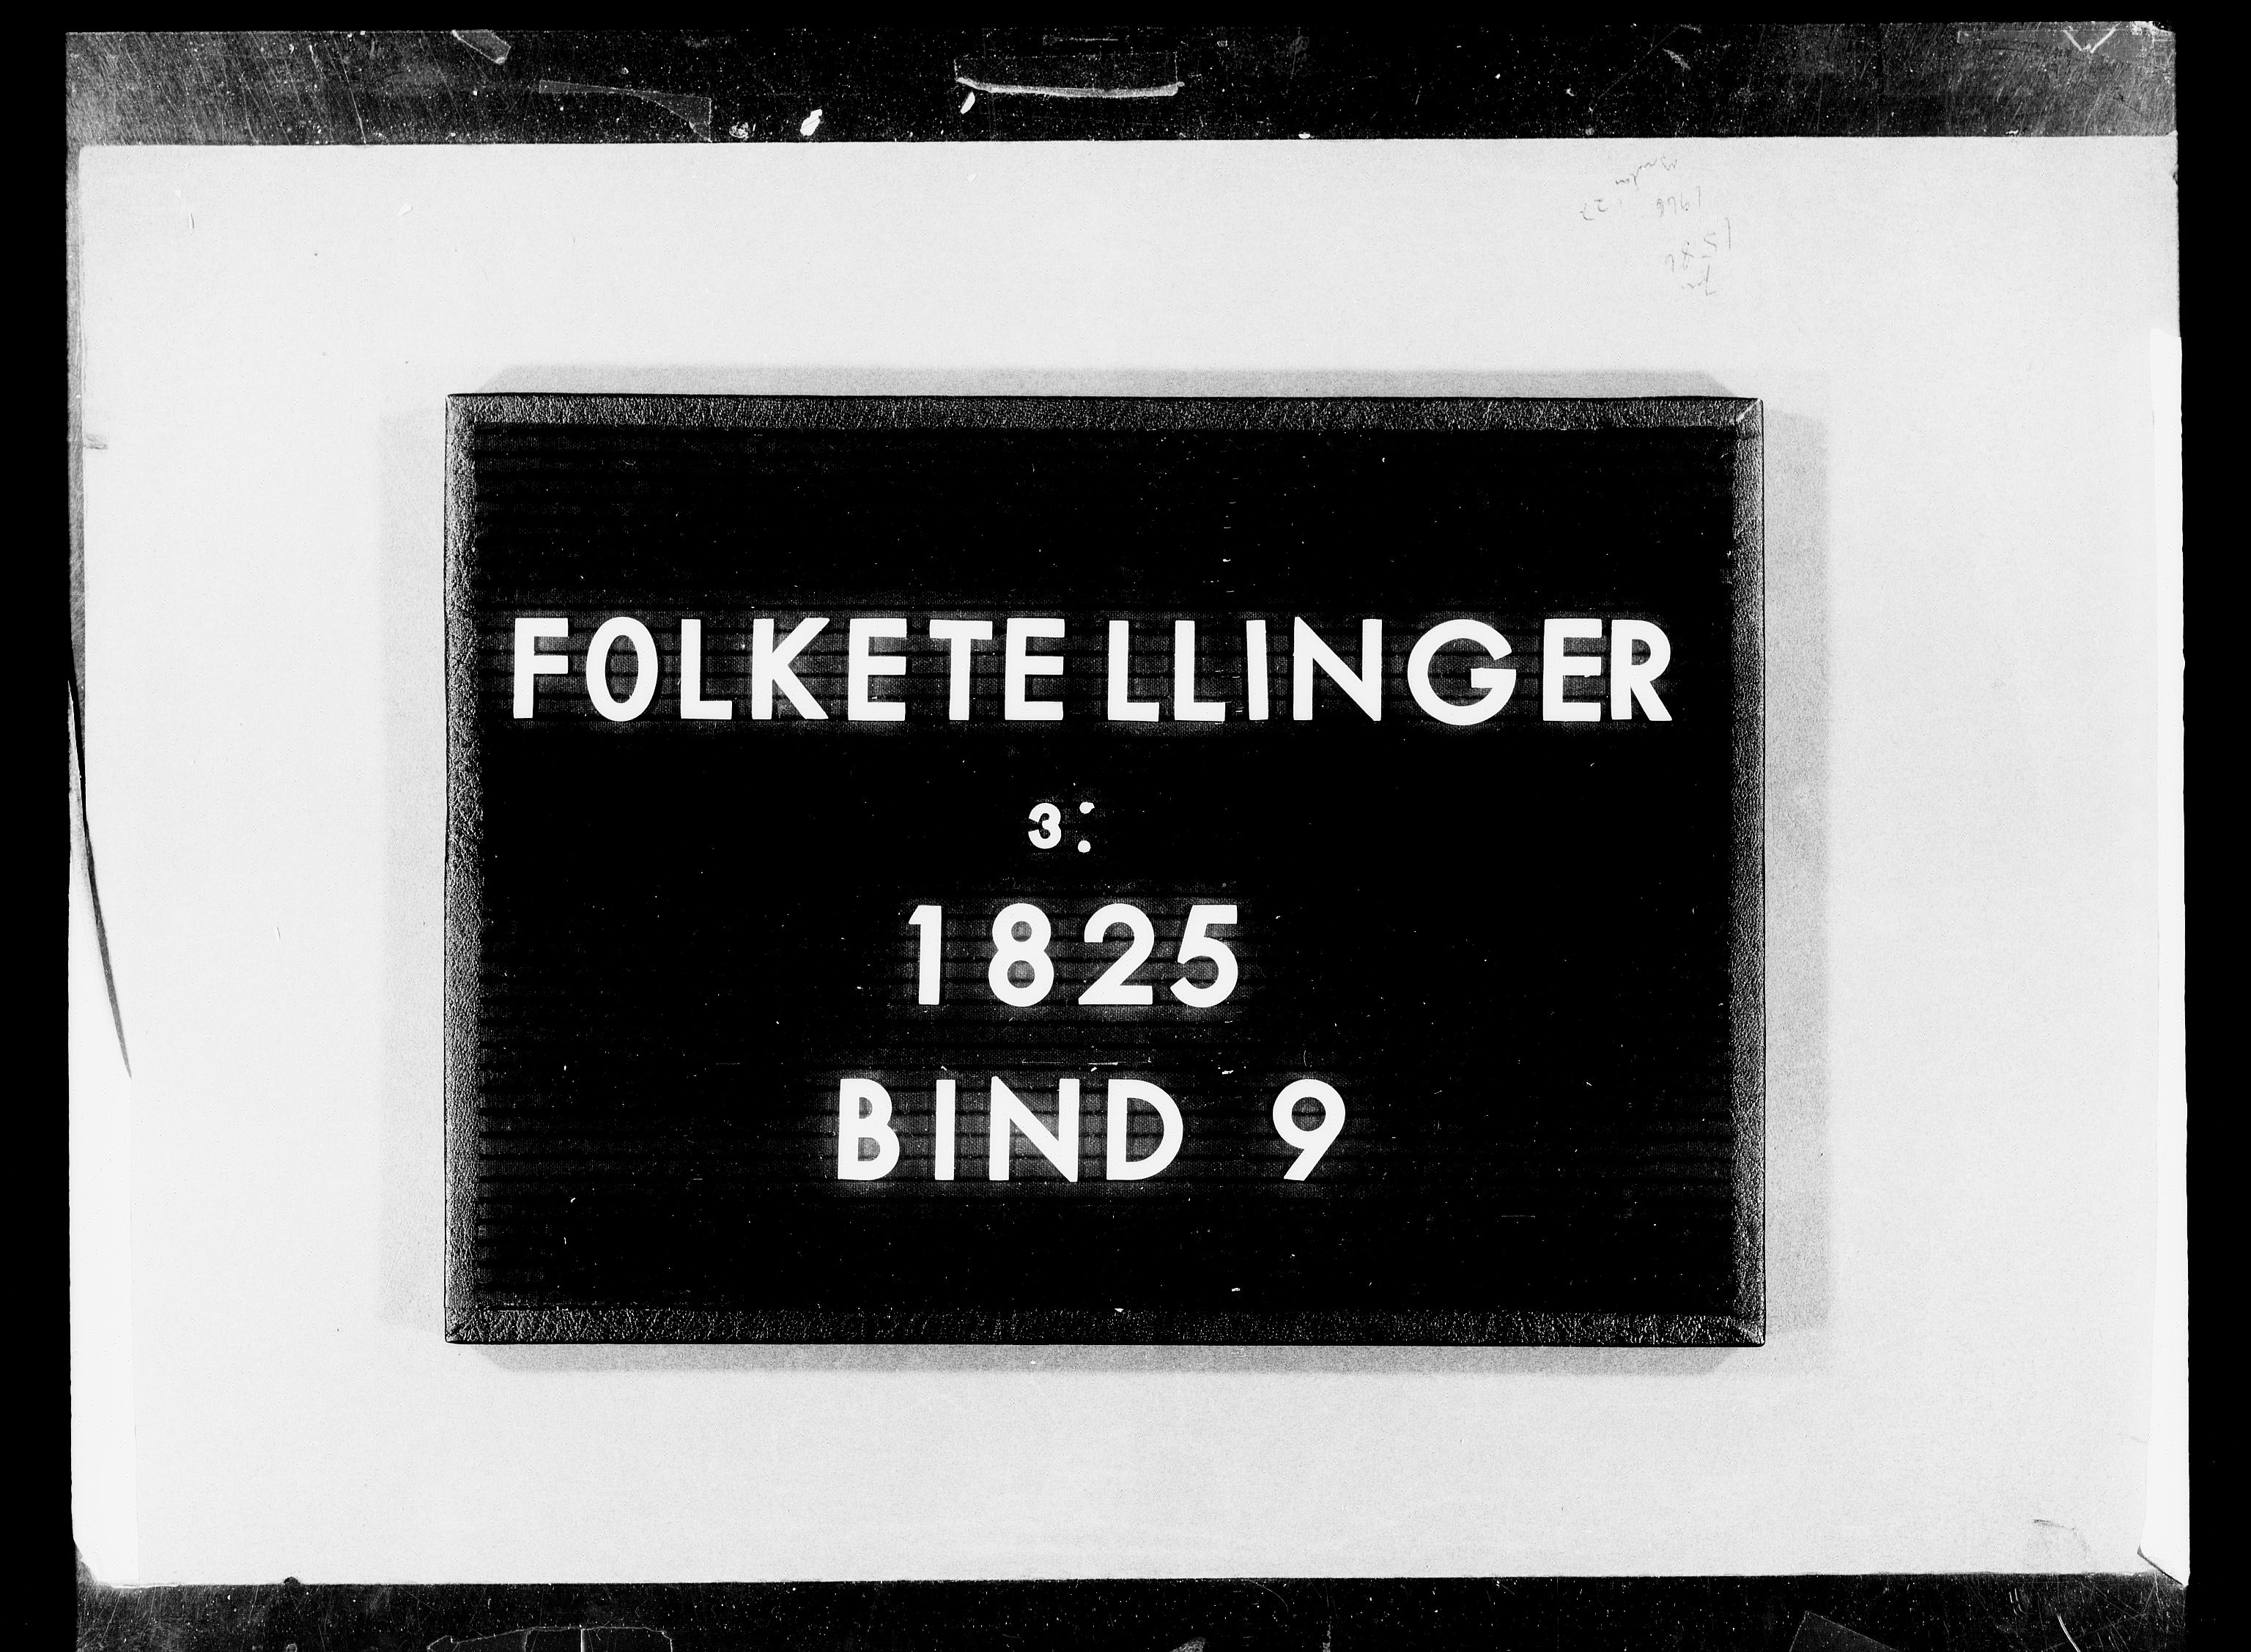 RA, Folketellingen 1825, bind 9: Bratsberg amt, 1825